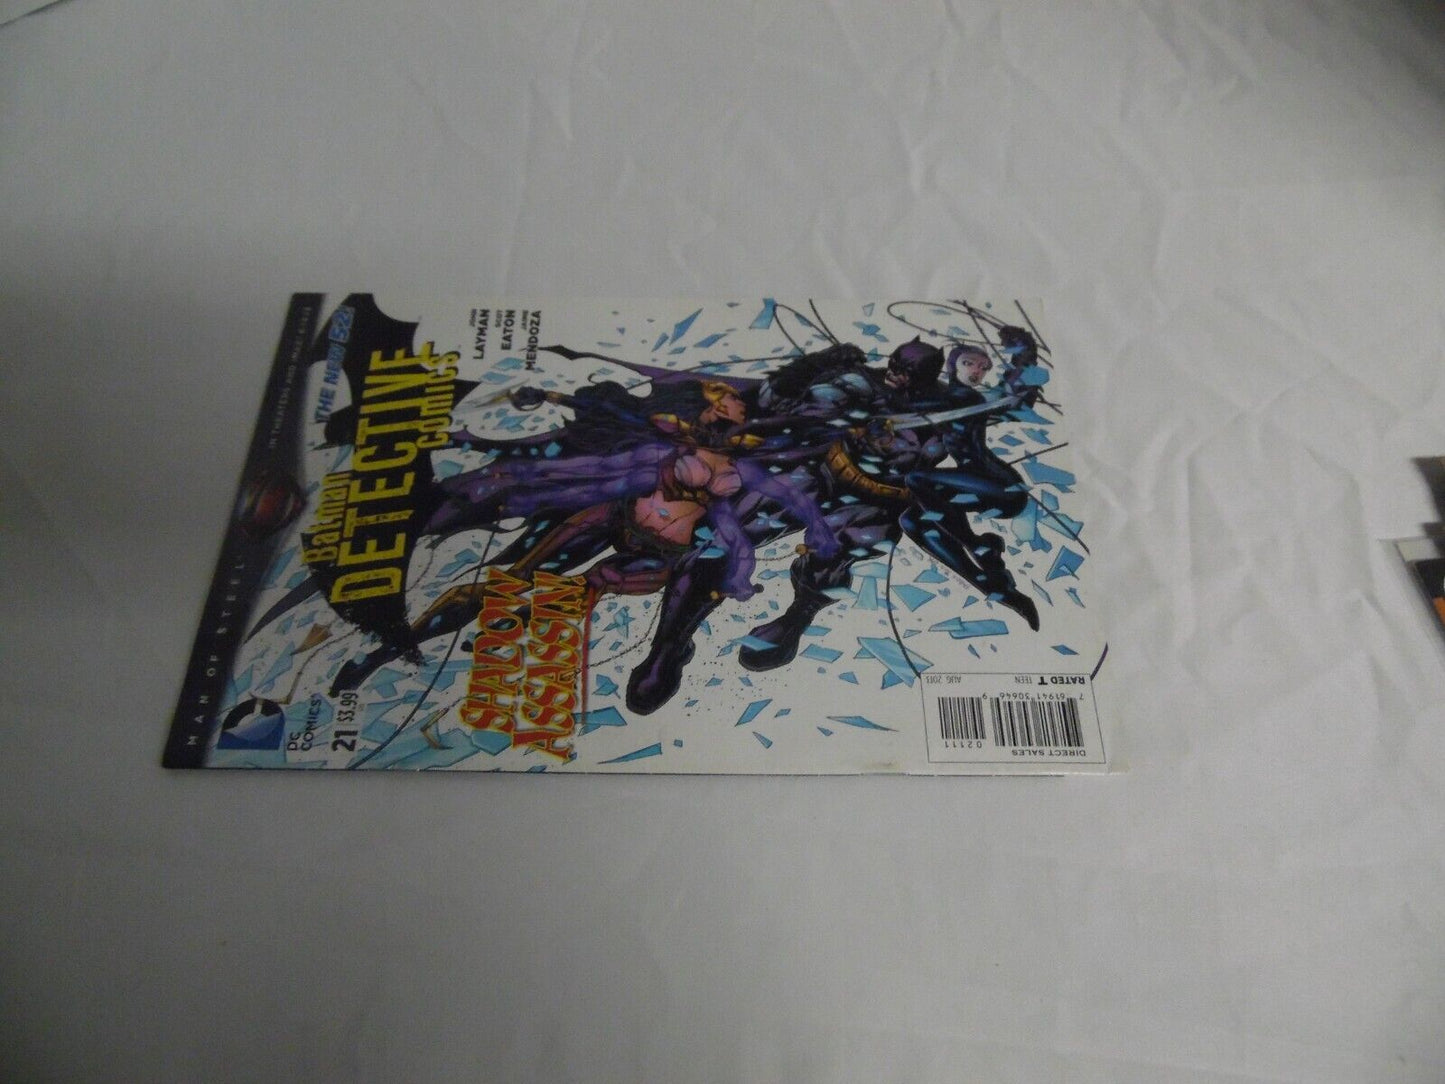 LOT OF 6 DC Comics  BATMAN  From 2006-2018 Issues 88,14,1,21,1,1 Lot 2